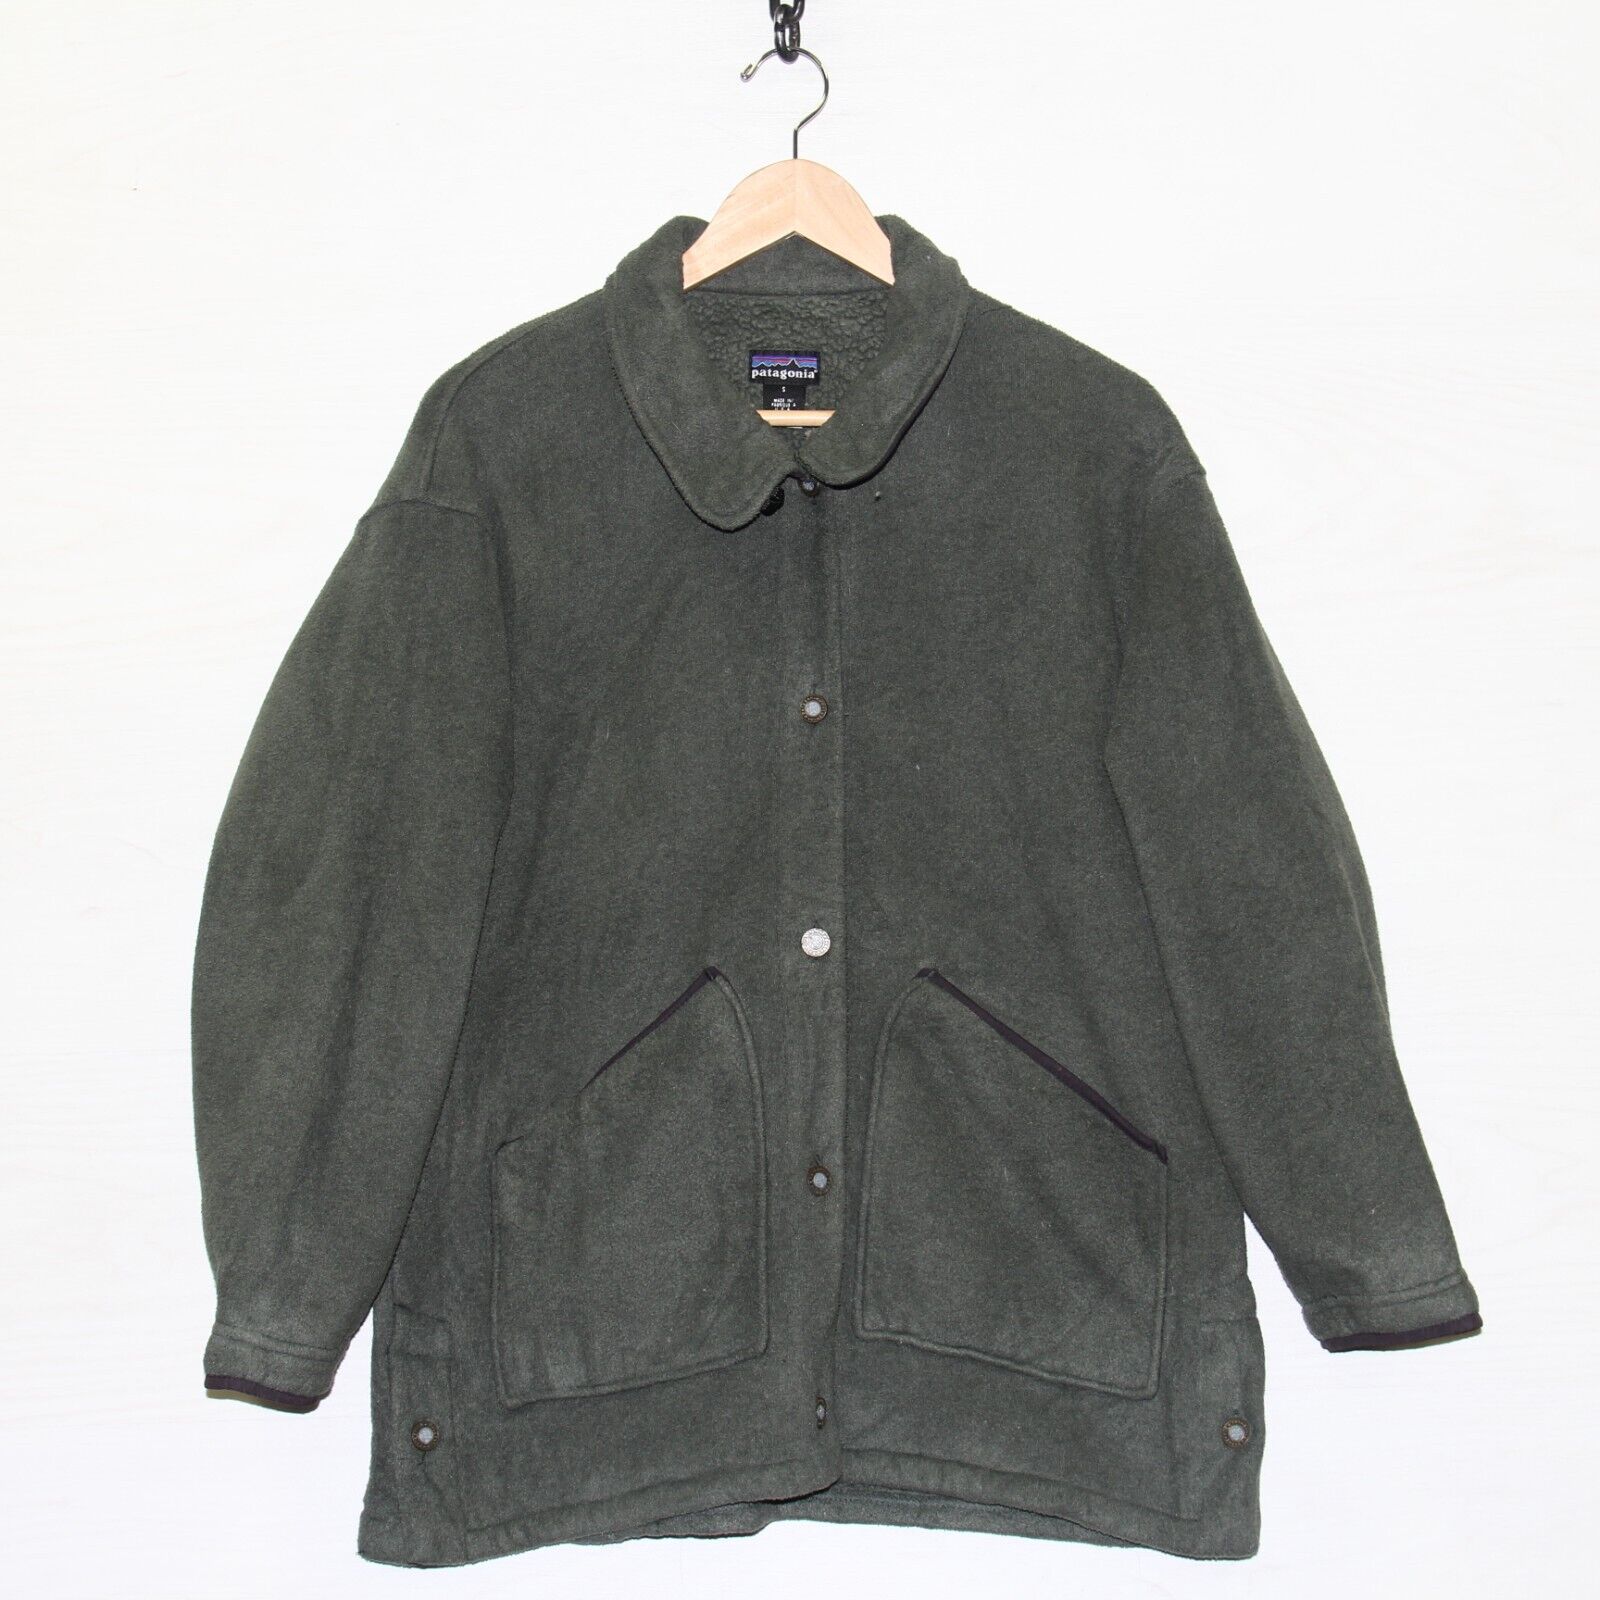 Vintage Patagonia Fleece Barn Coat Jacket Size Small Gray Green